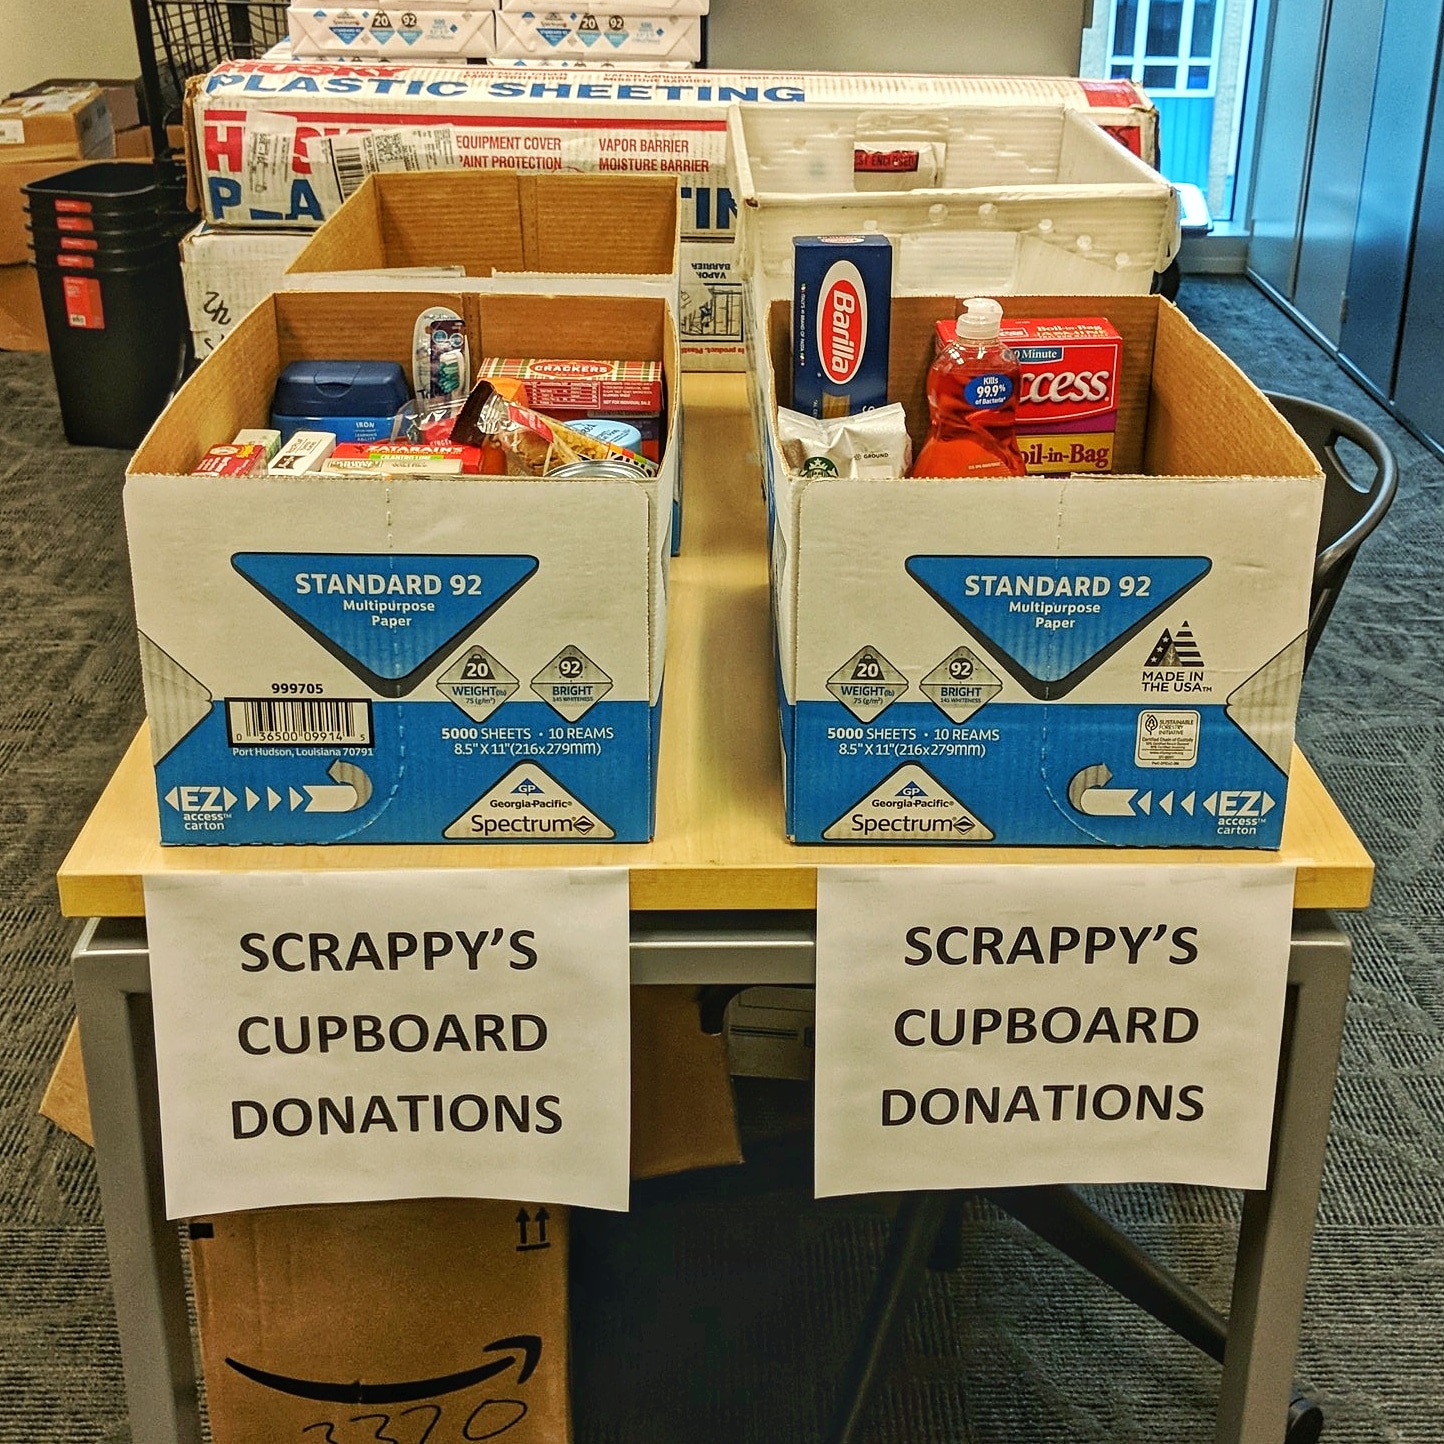 Scrappy's Cupboard Donations